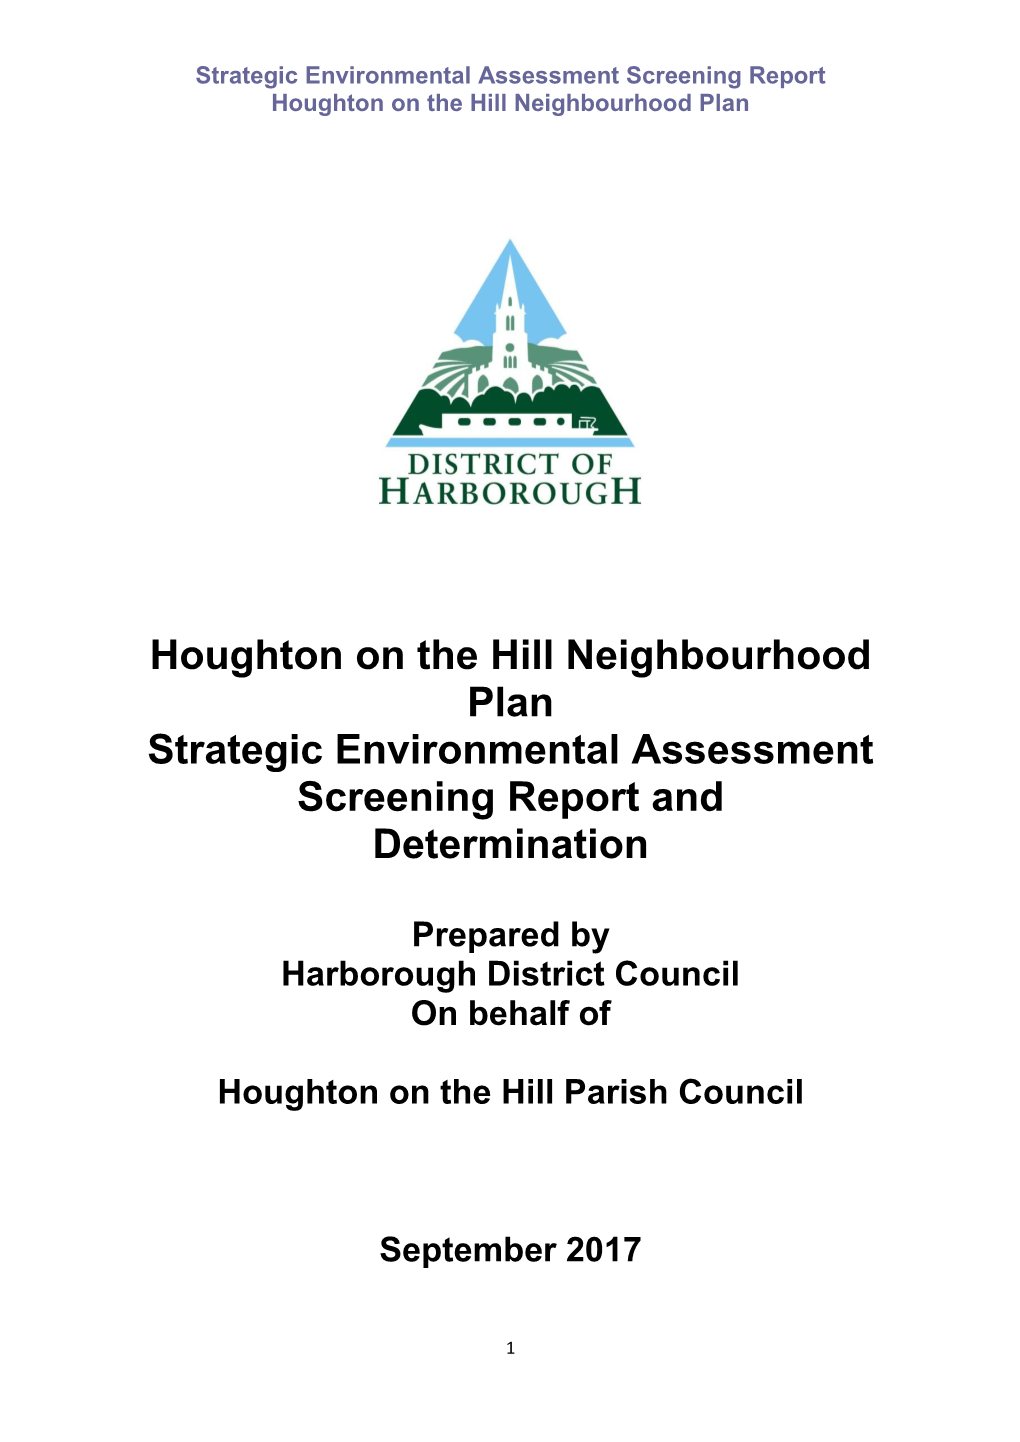 Houghton on the Hill Neighbourhood Plan Strategic Environmental Assessment Screening Report and Determination